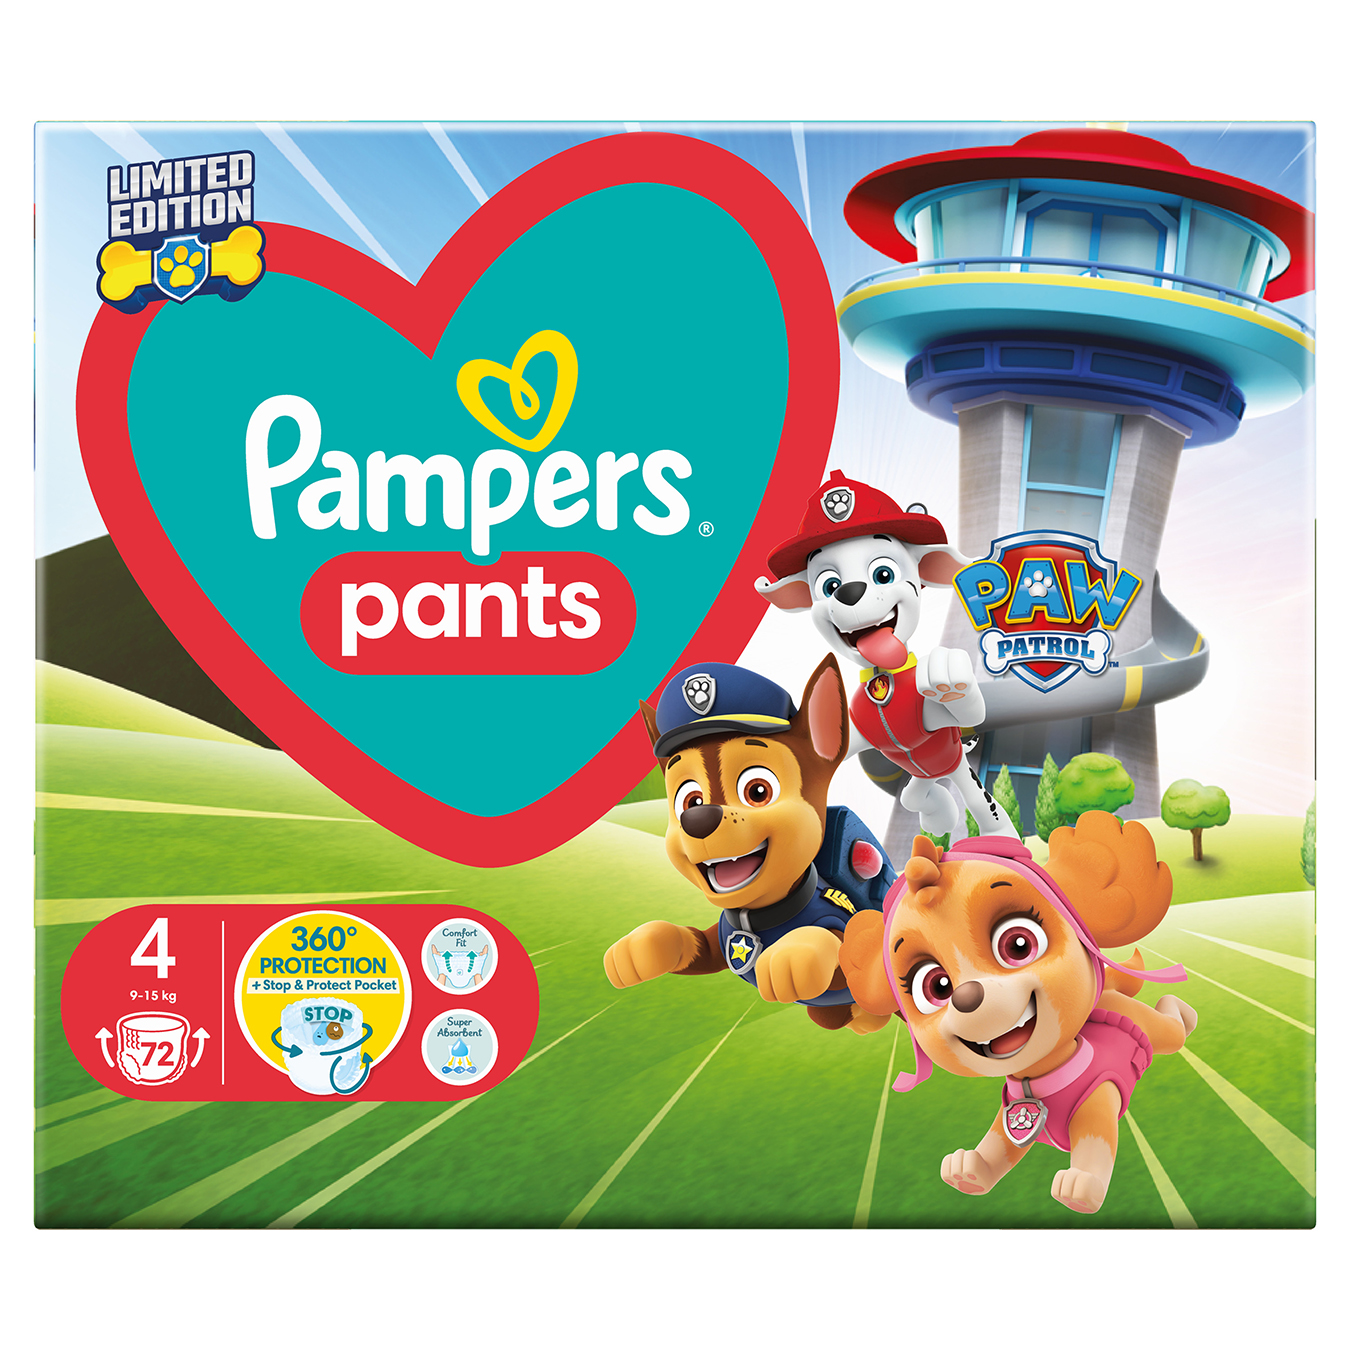 Diapers-panties Pampers paw patrol limedit children's disposable pants maxi 9-15kg 72pcs